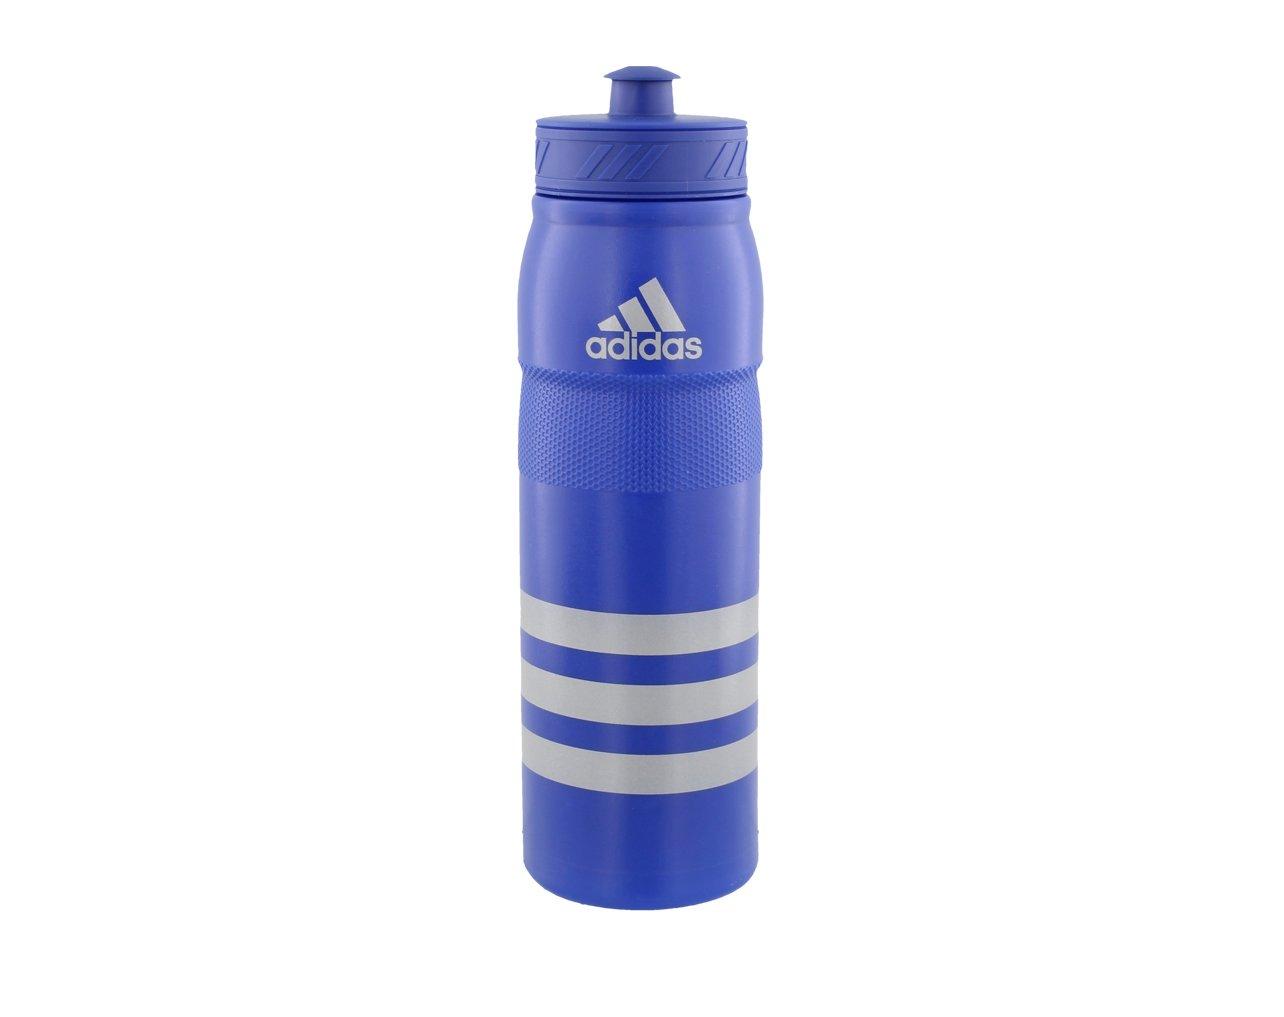 Adidas Stadium Water Bottle